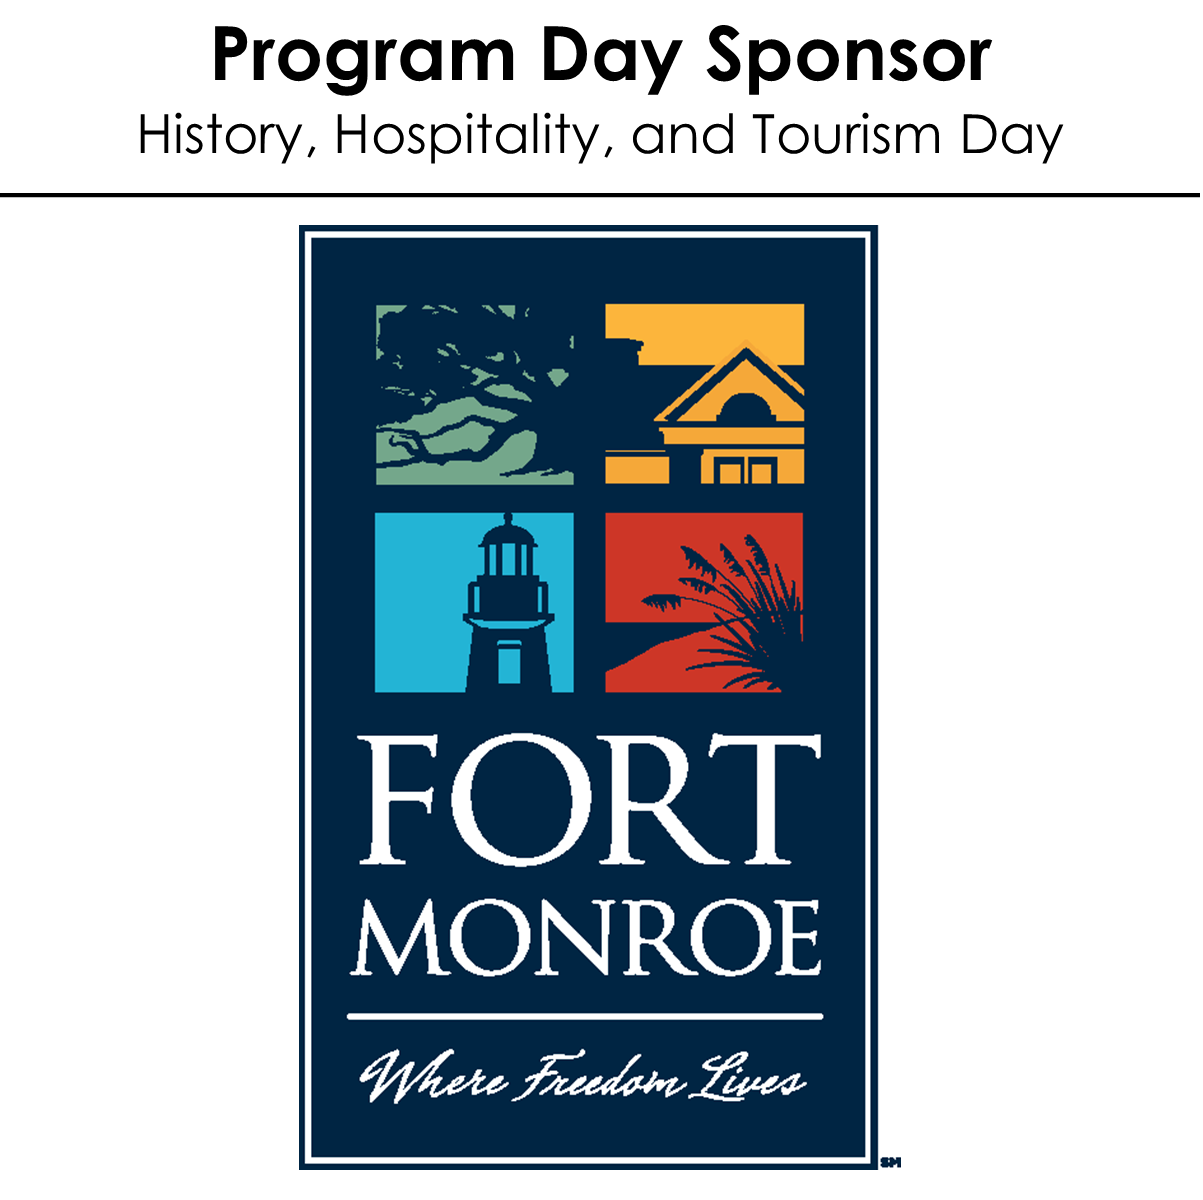 Fort Monroe Authority